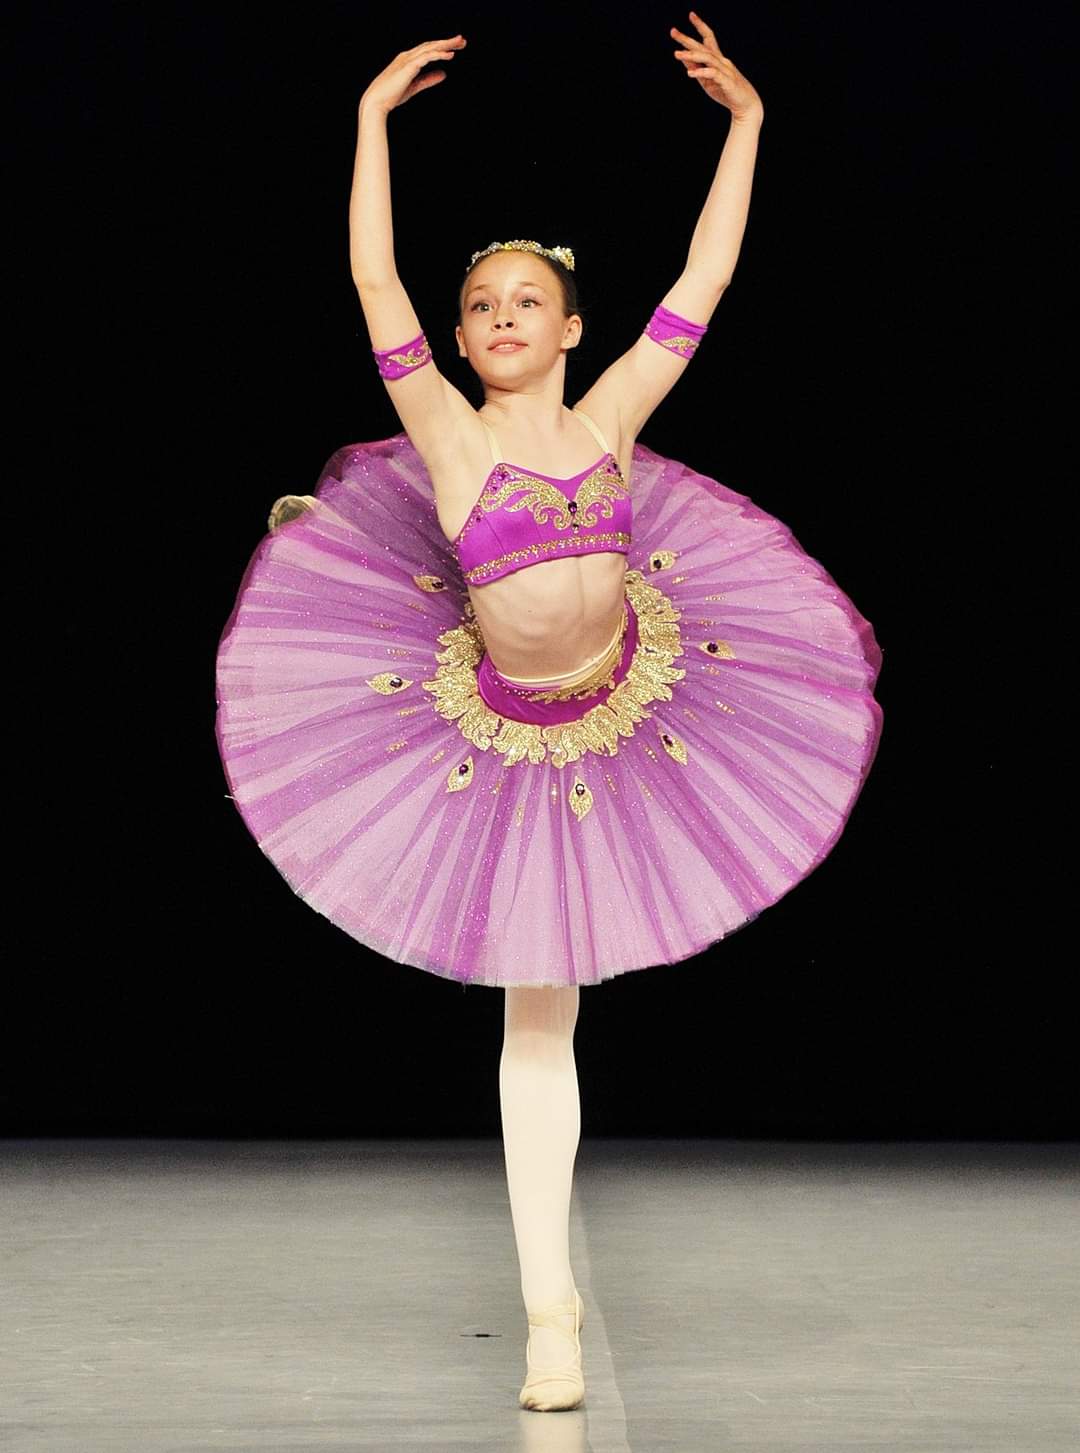 tutu szycie paczka baletowa klasyczna stroje baletowe Le Corsaire Medora ballet costumes